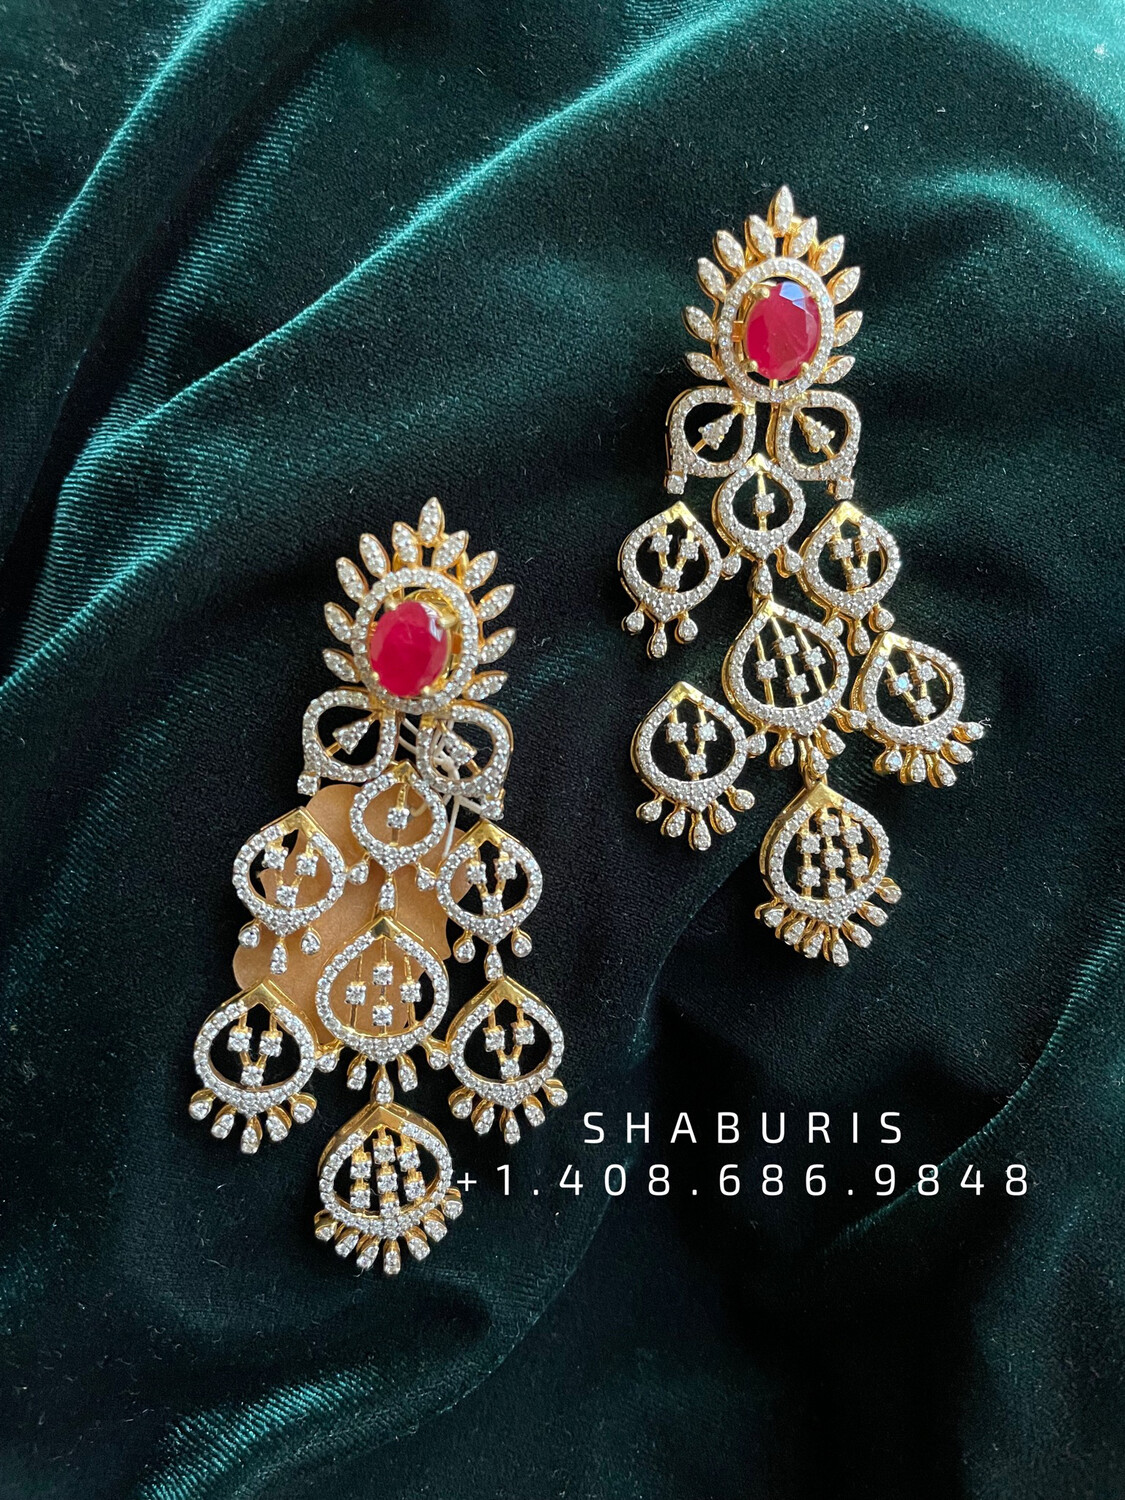 Diamond earrings Cocktail Jewelry Indian Jewelry Silver Jewelry